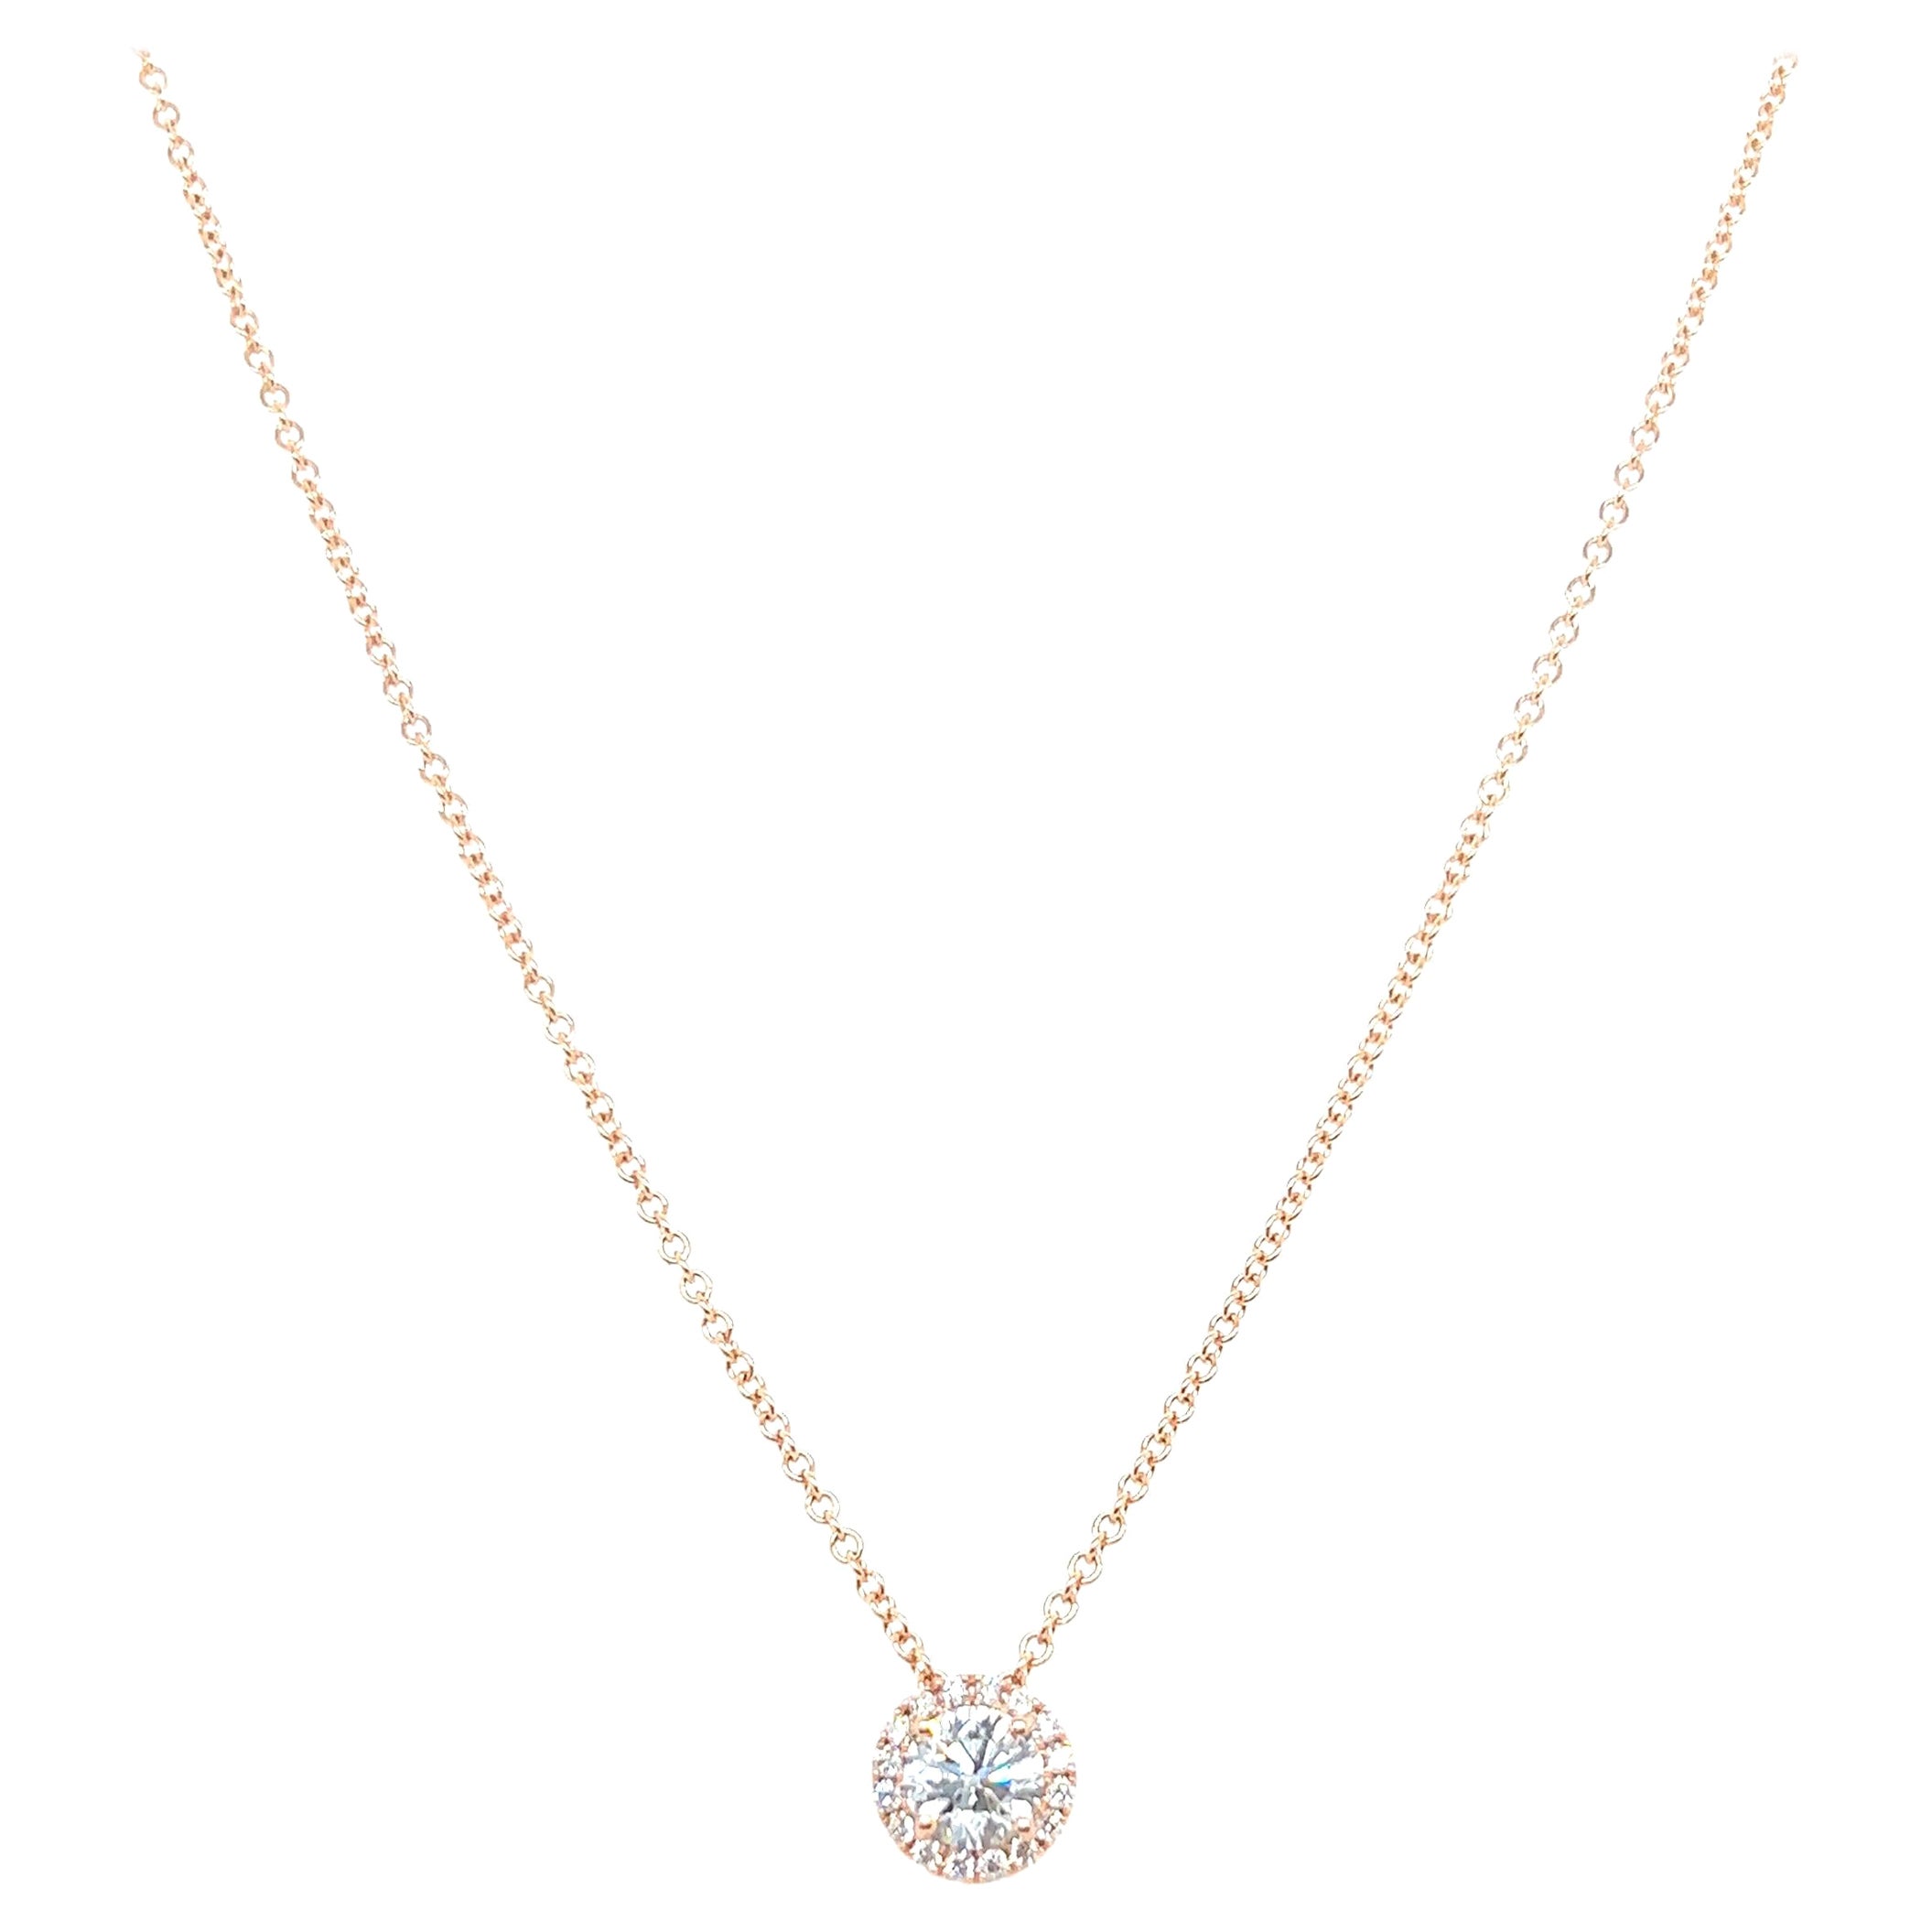 14k White Gold 0.90 Carat Round Cut Diamond Solitaire Pendant Necklace